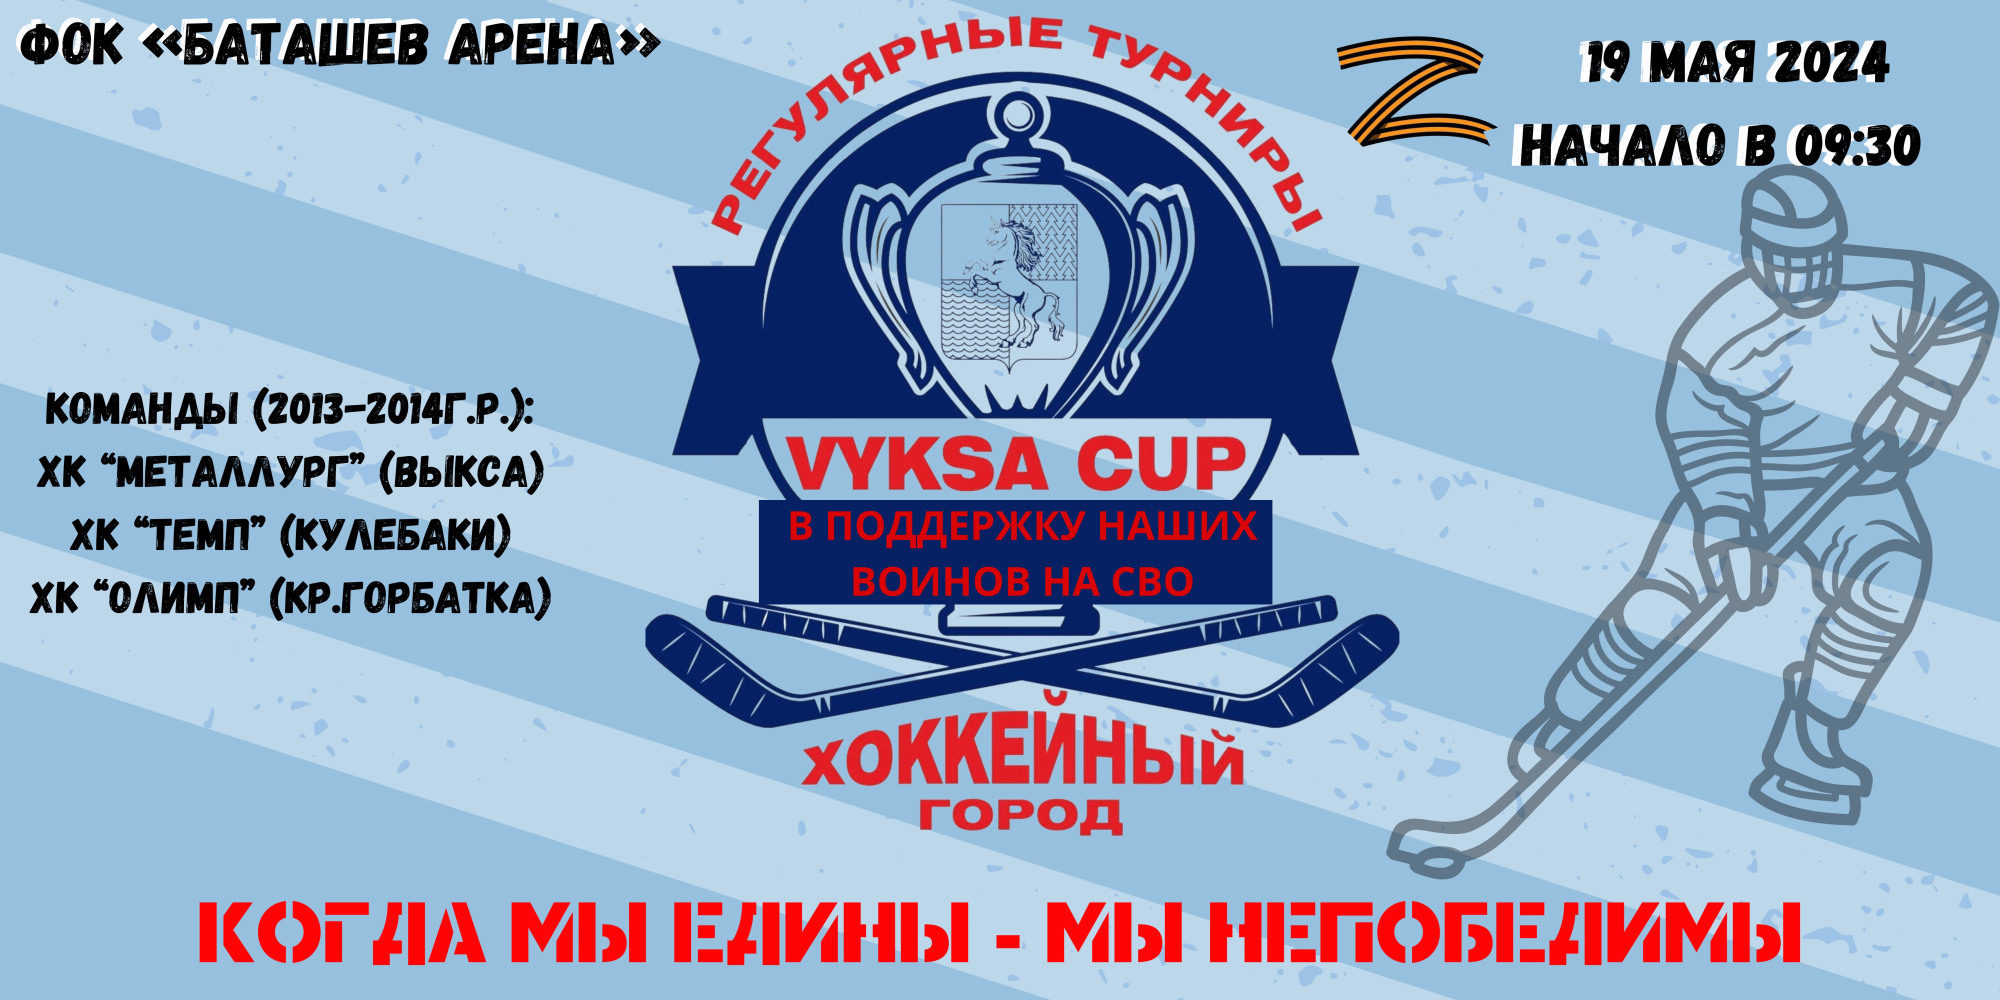 Детский хоккейный турнир Vyksa Cup